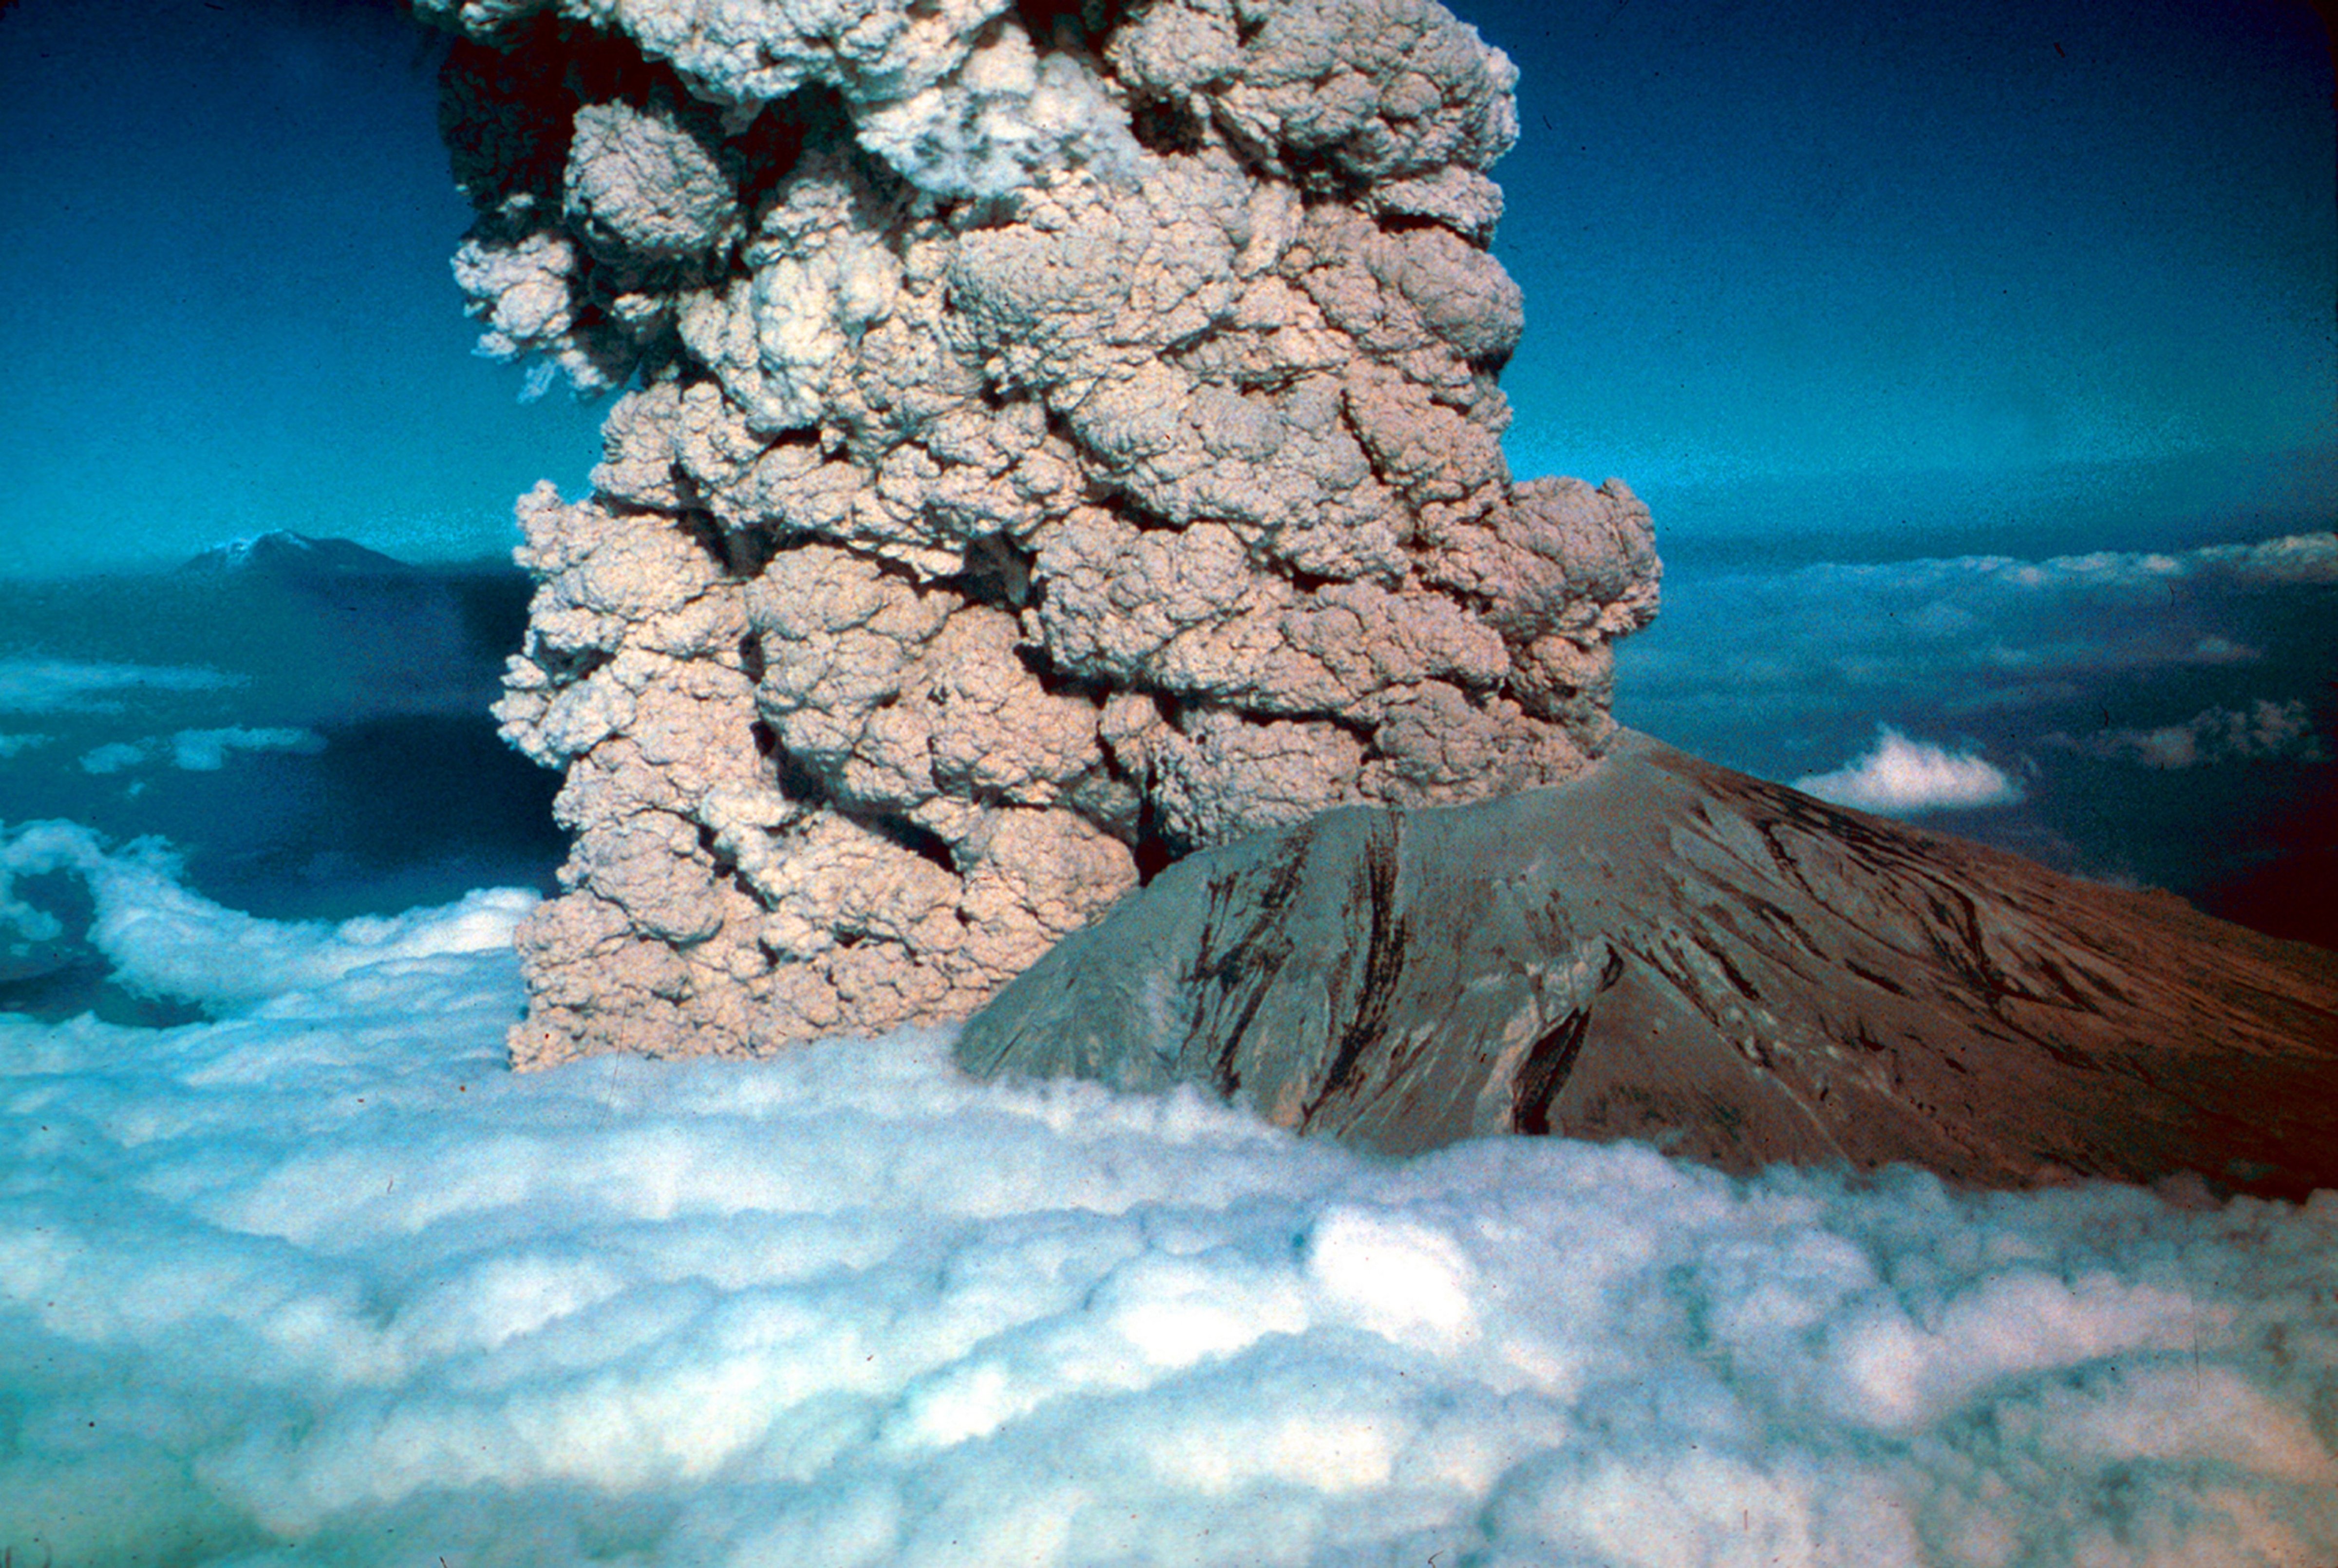 Volcanic eruption.